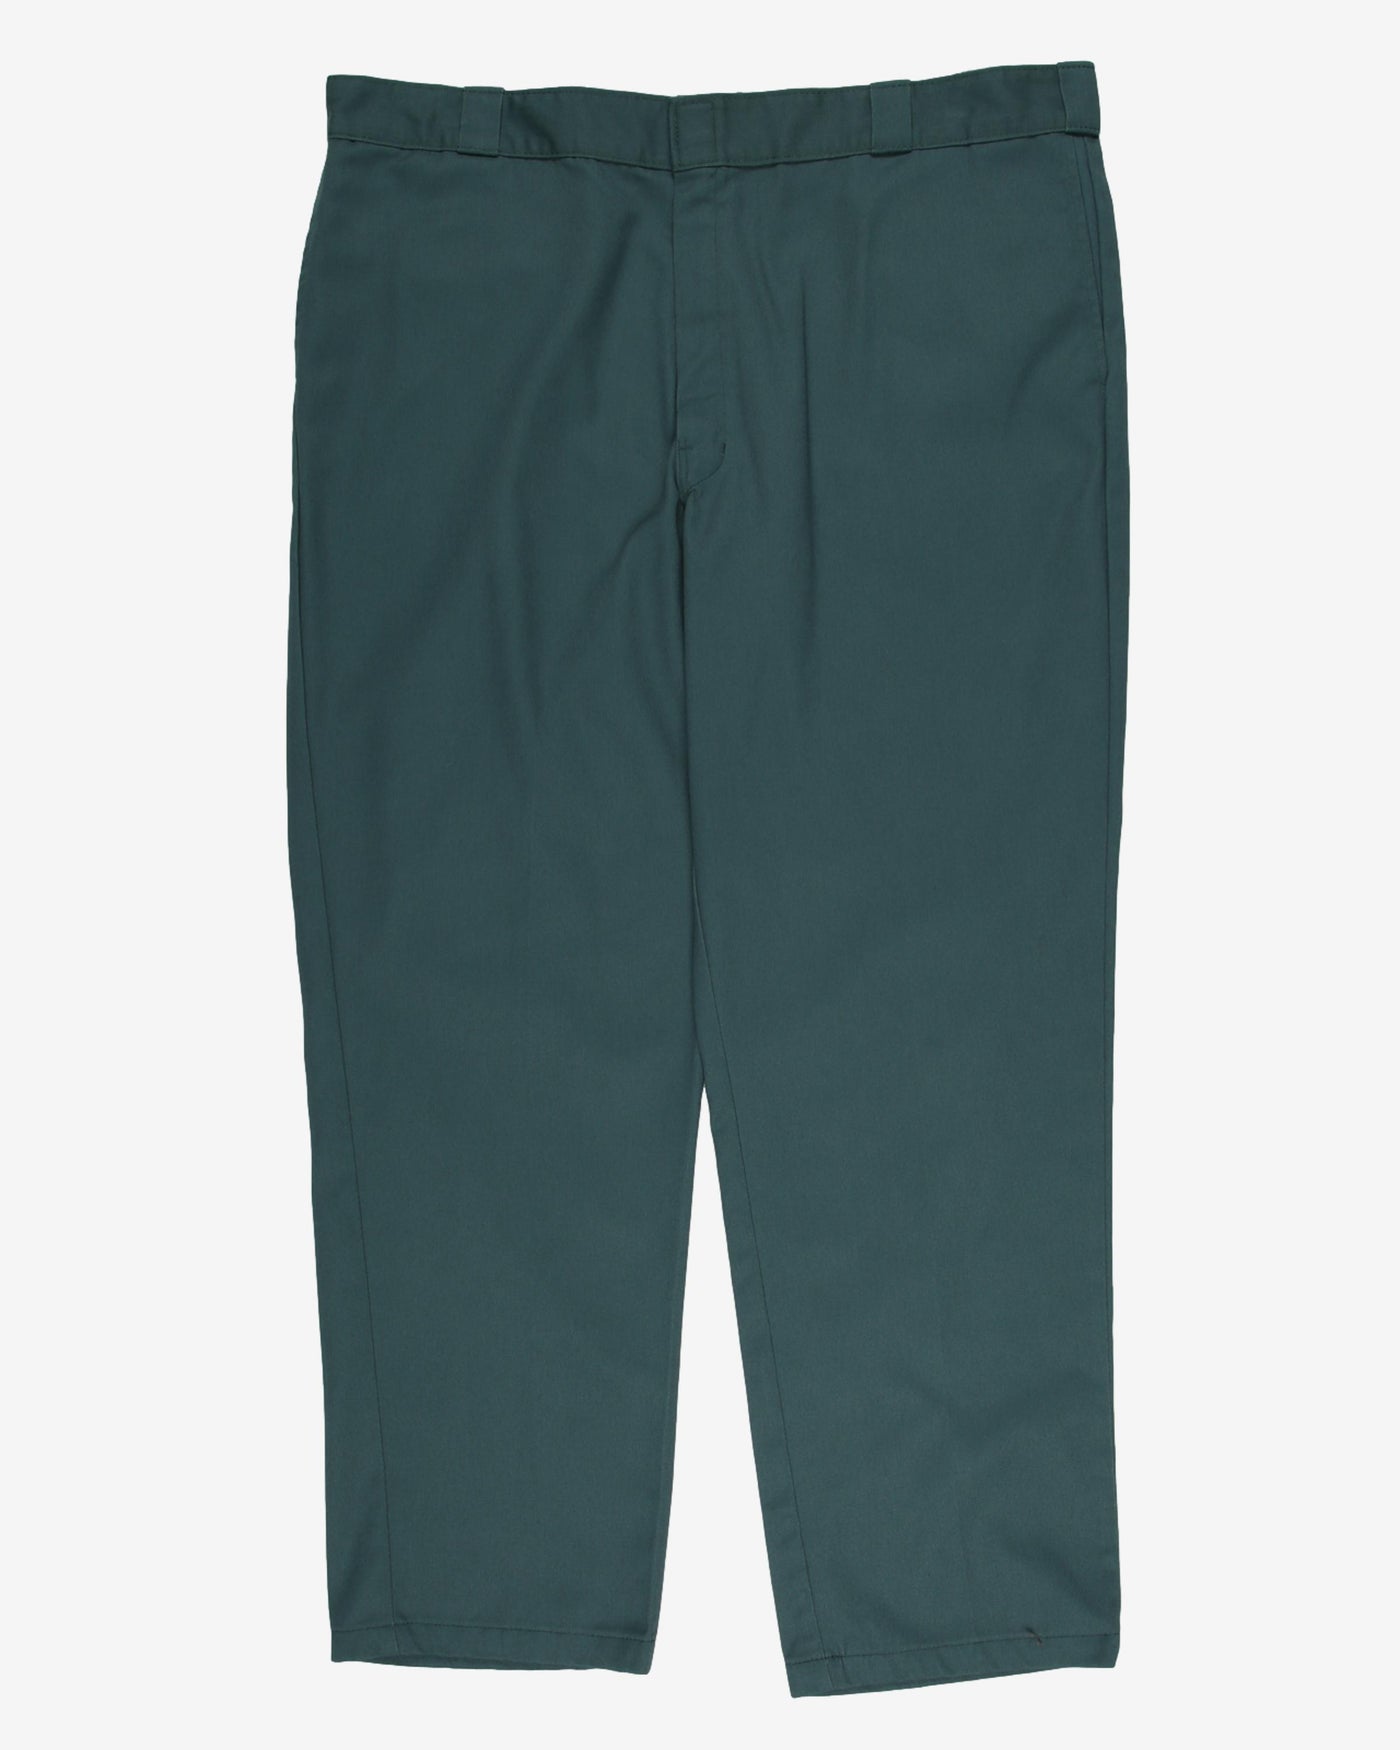 Dickies 874 Teal Green Work Pant Trousers - W42 L32